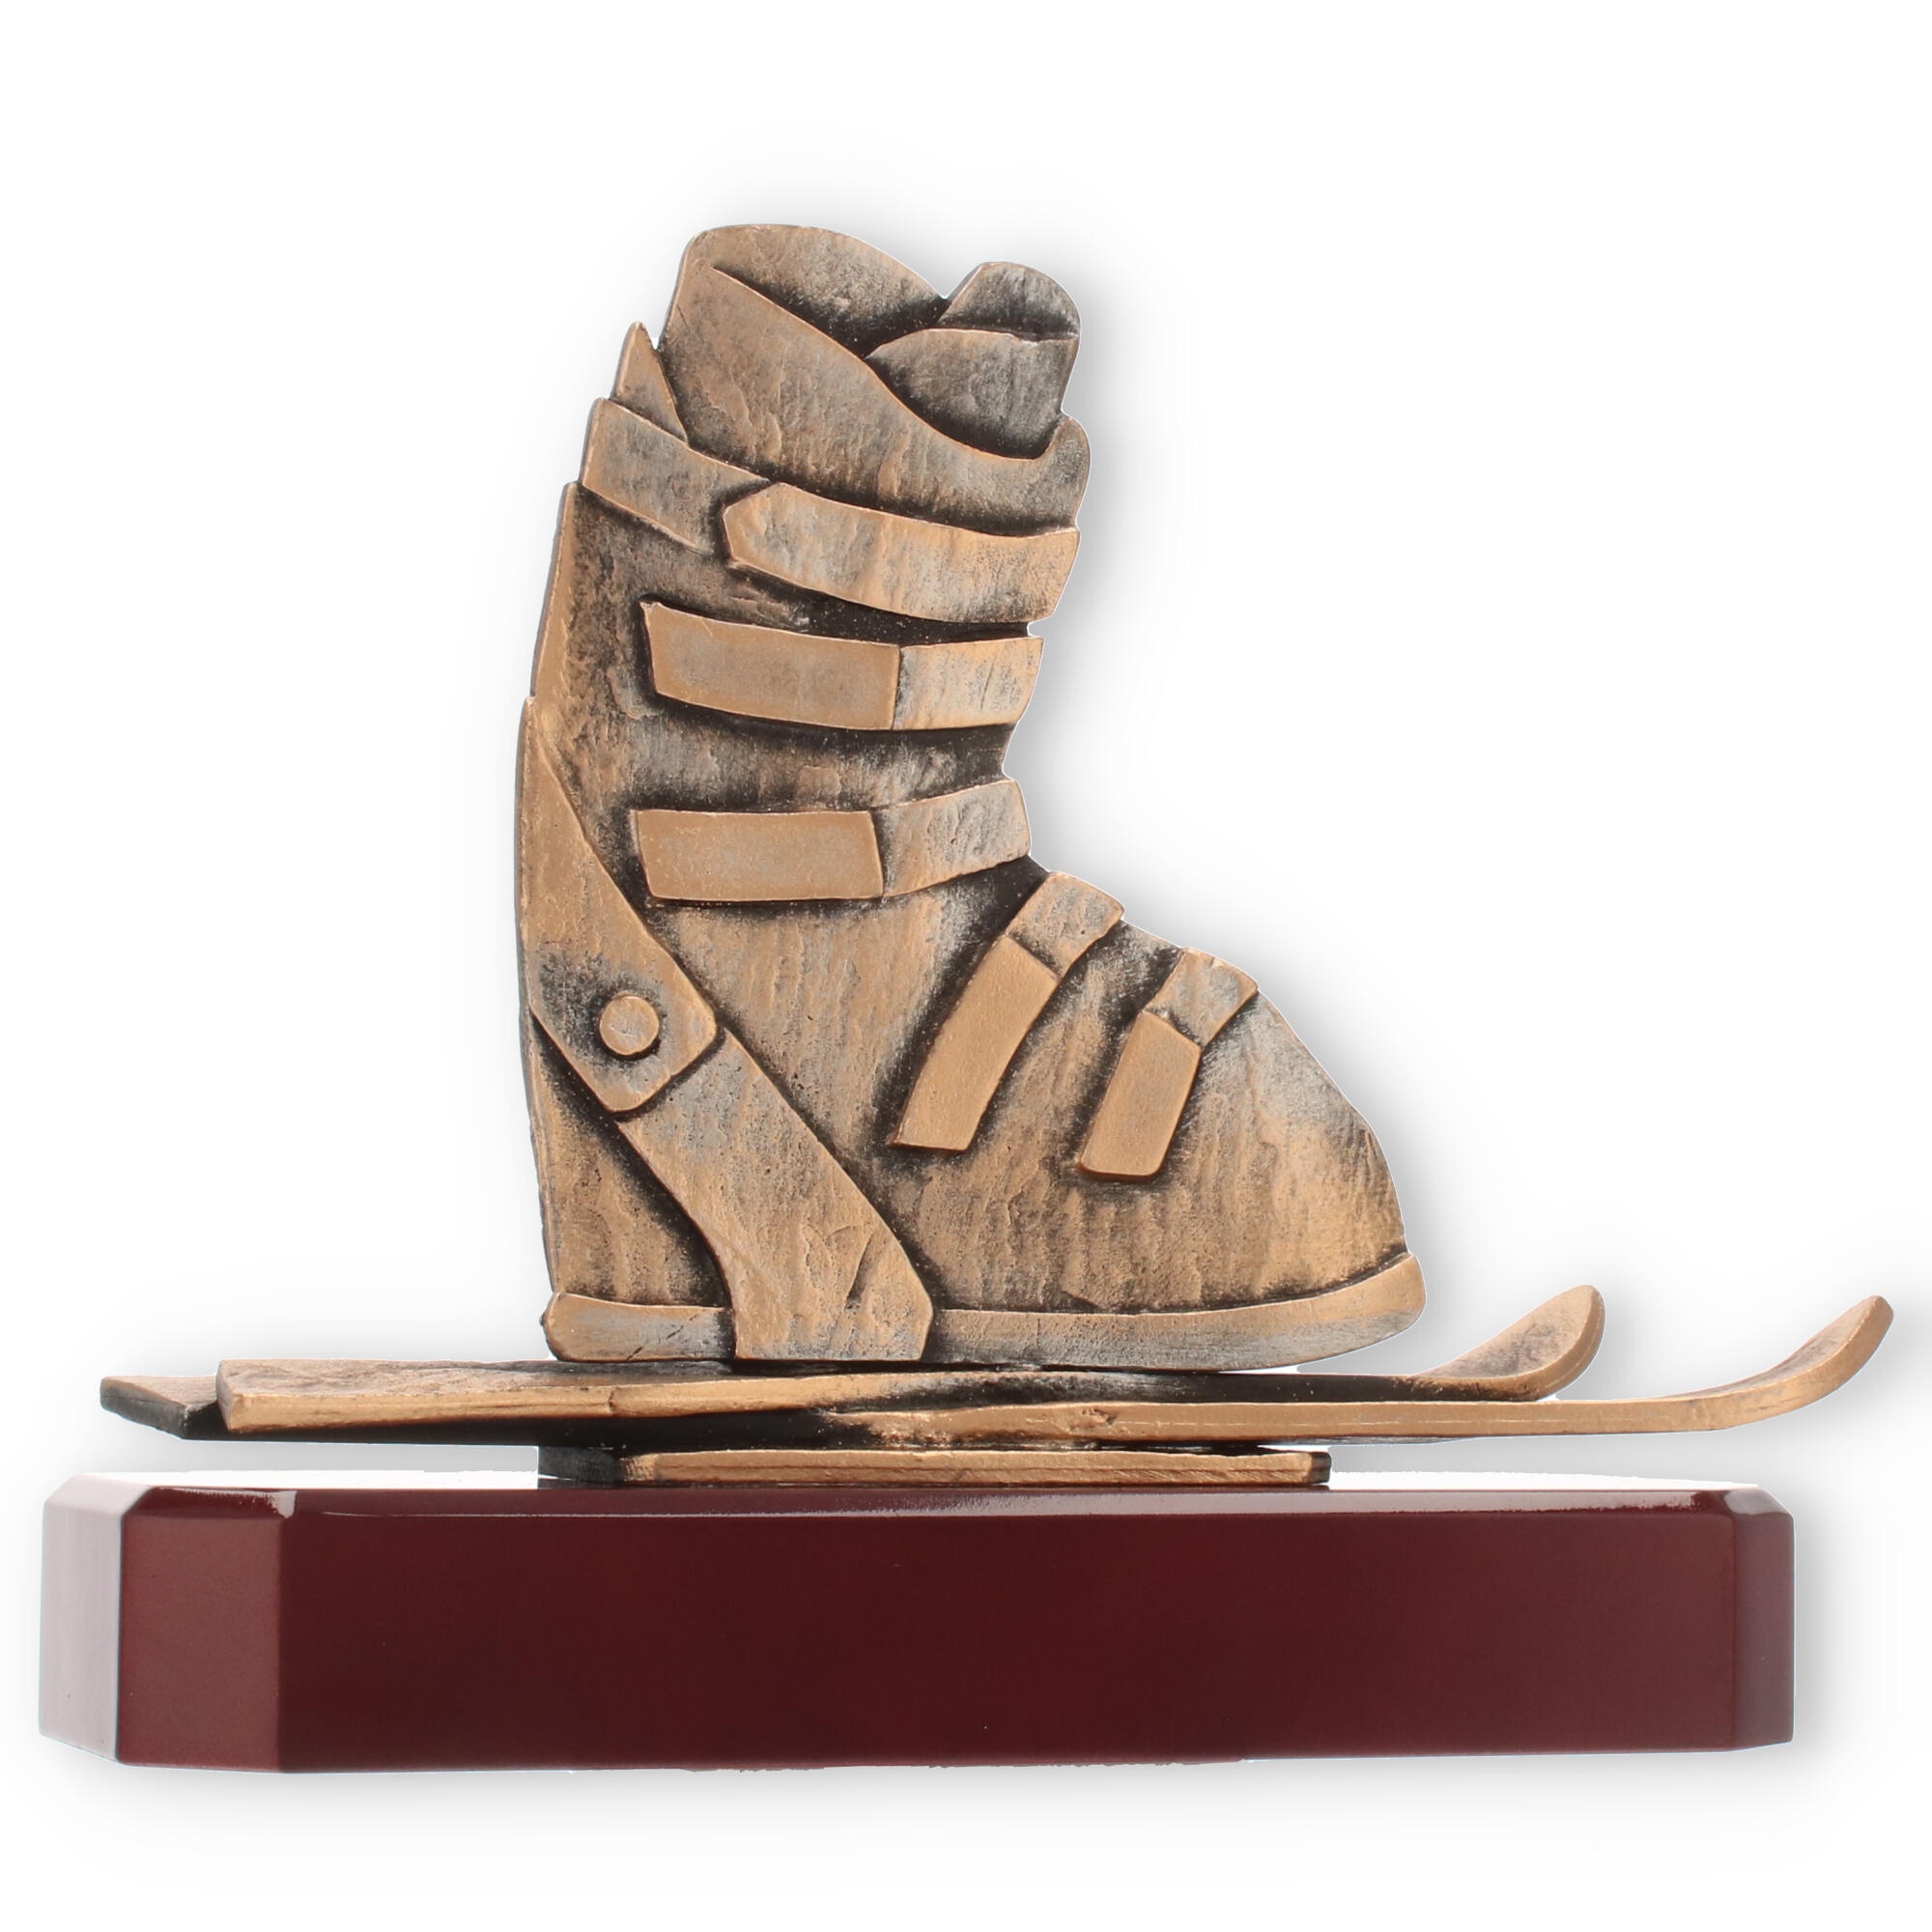 Pokal Zamakfigur Skischuh altgold auf mahagonifarbenen Holzsockel 18,0cm